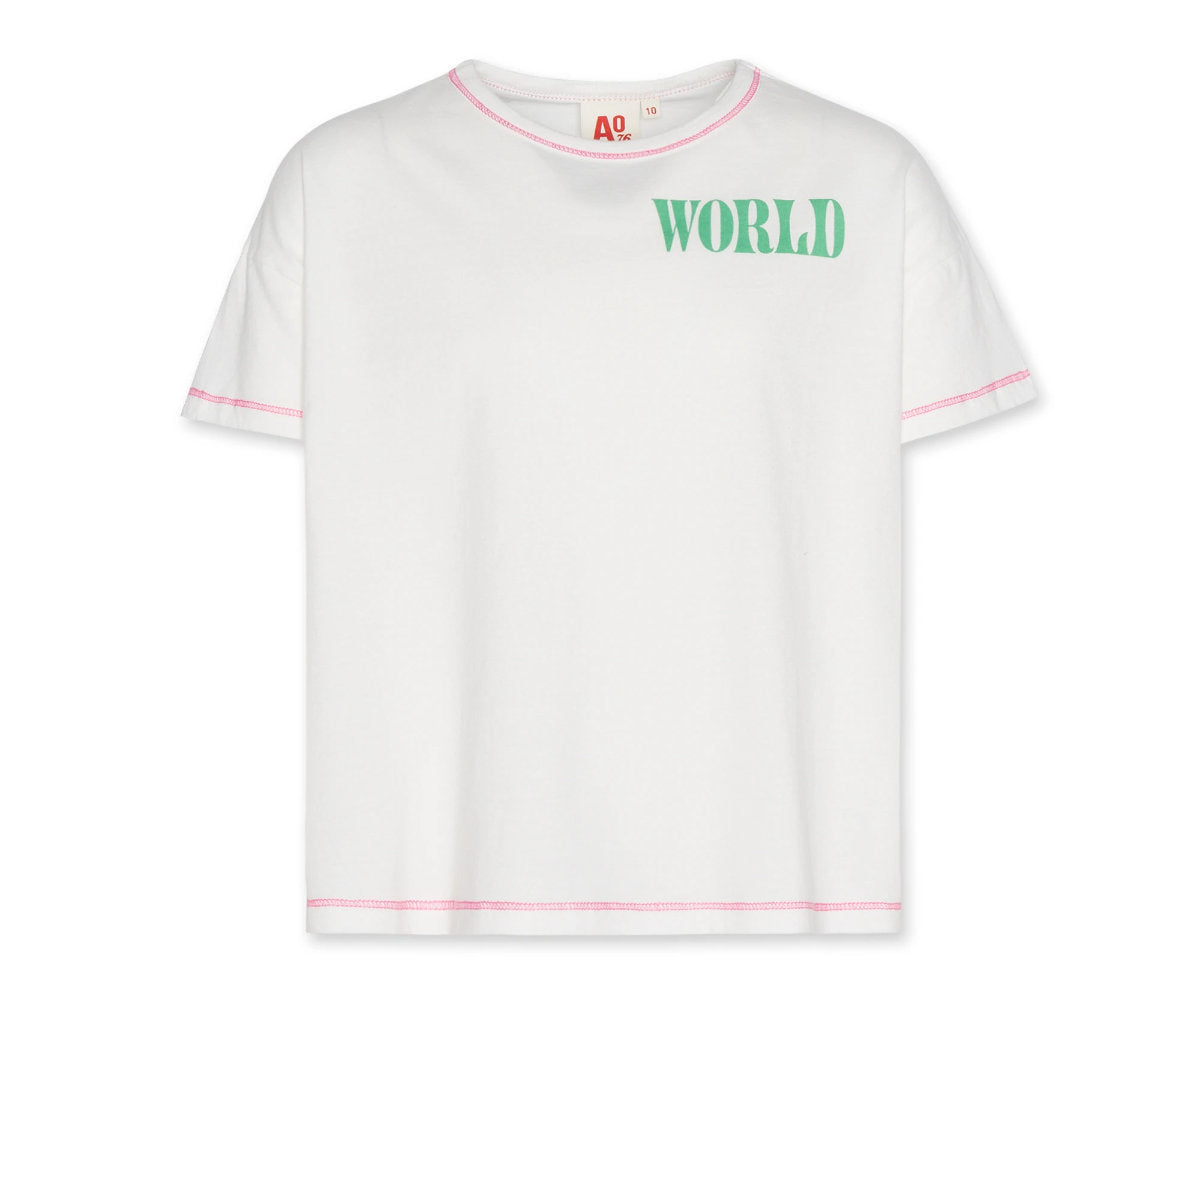 AO76 T-Shirt Judith oversize world offwhite